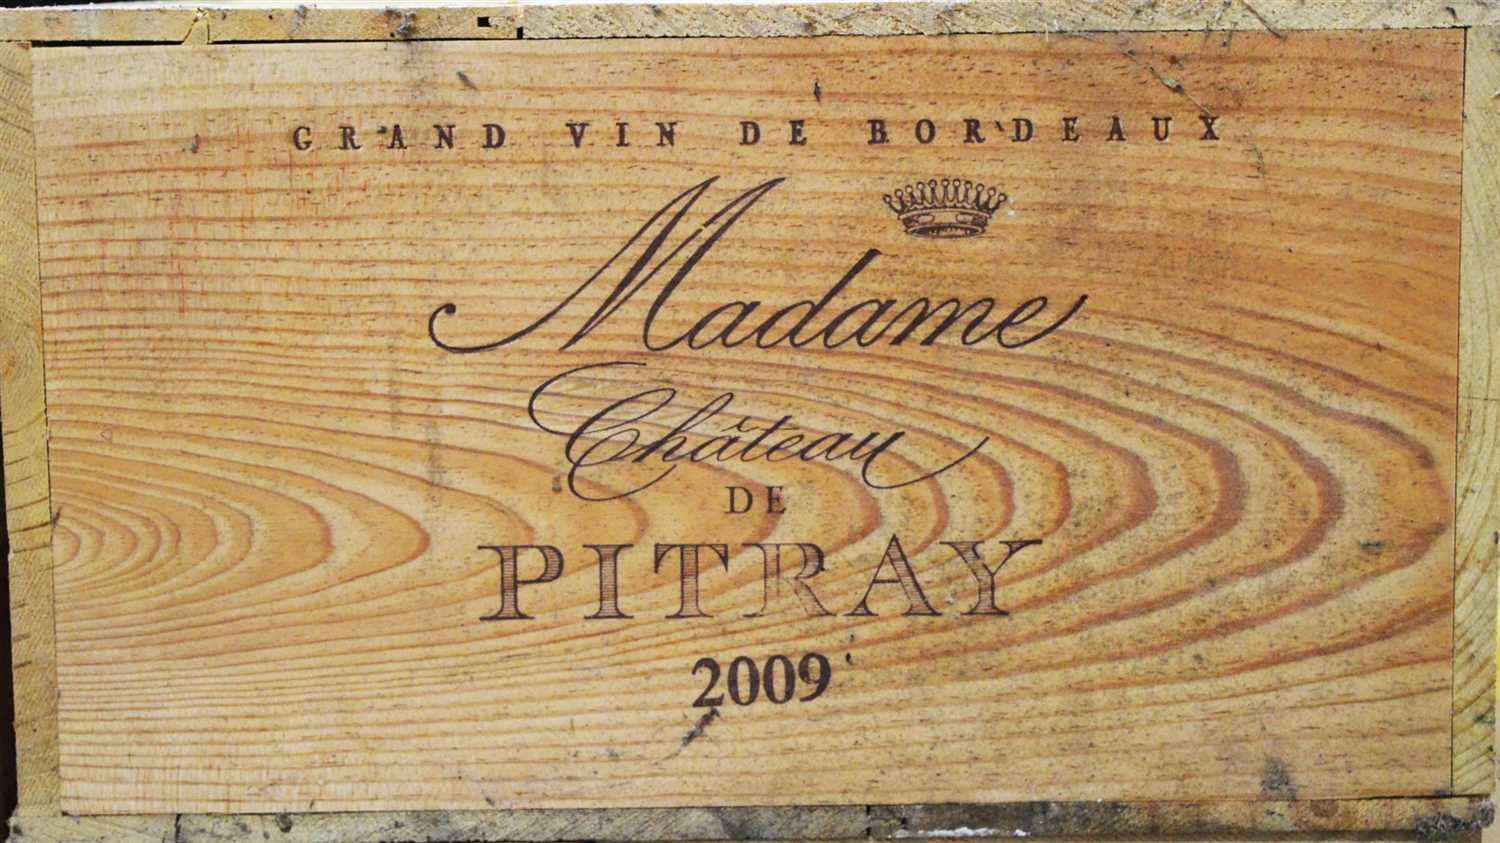 Lot 396 - Twelve bottles of Chateau Madame de Pitray.